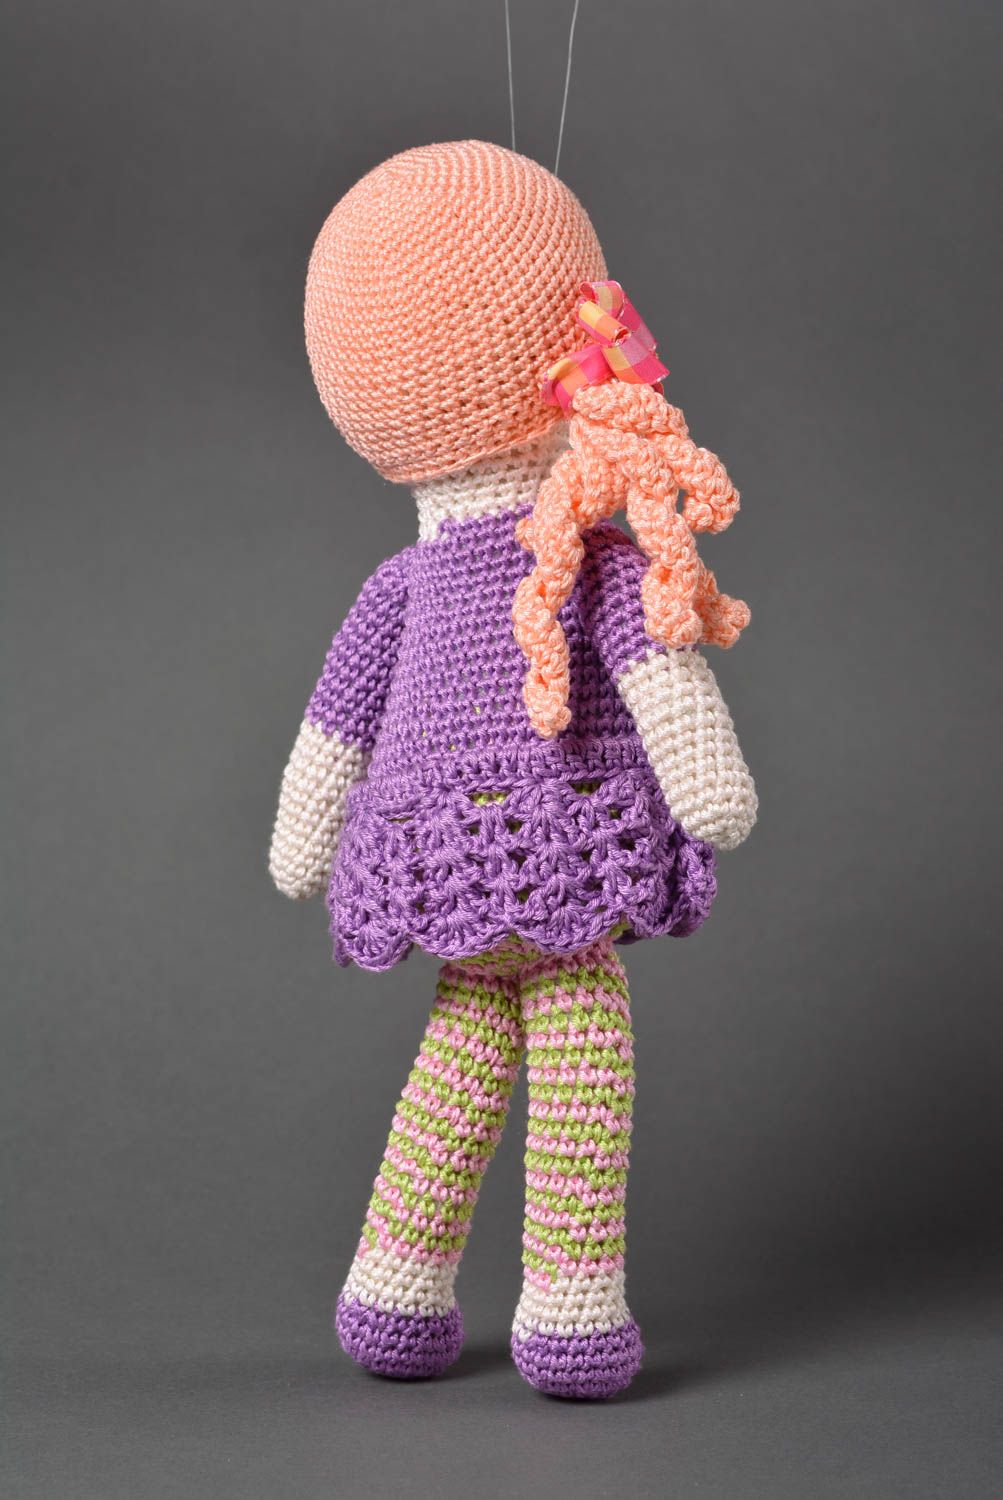 Handmade crochet toy stuffed toy soft toy for kids nursery design gift ideas photo 4